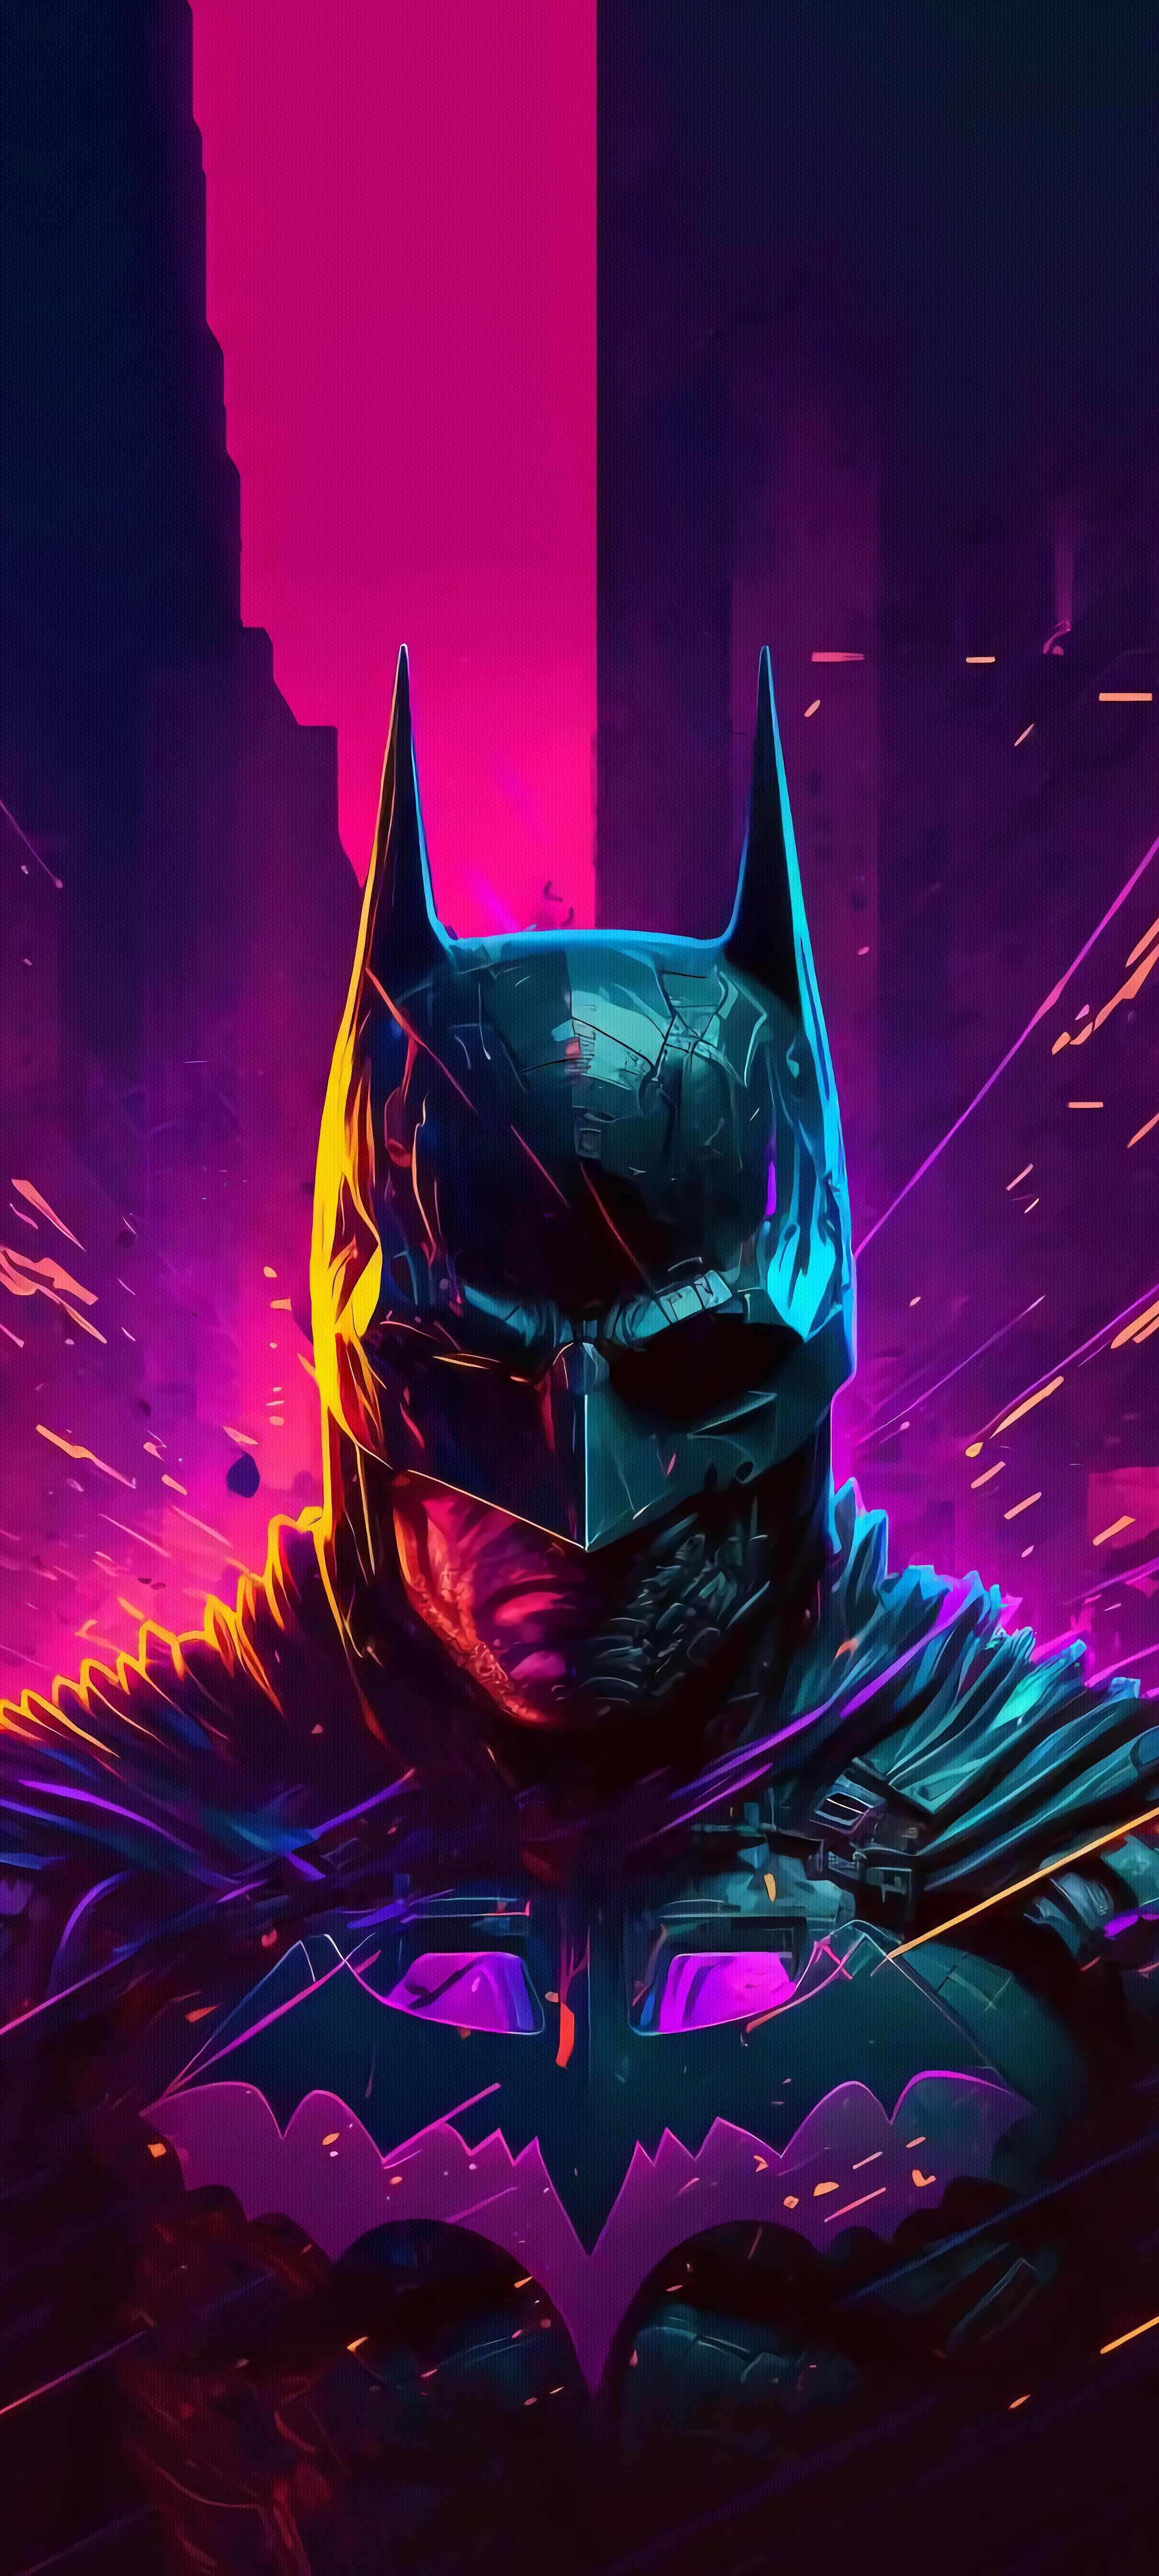 A batman illustration in neon colors - Batman